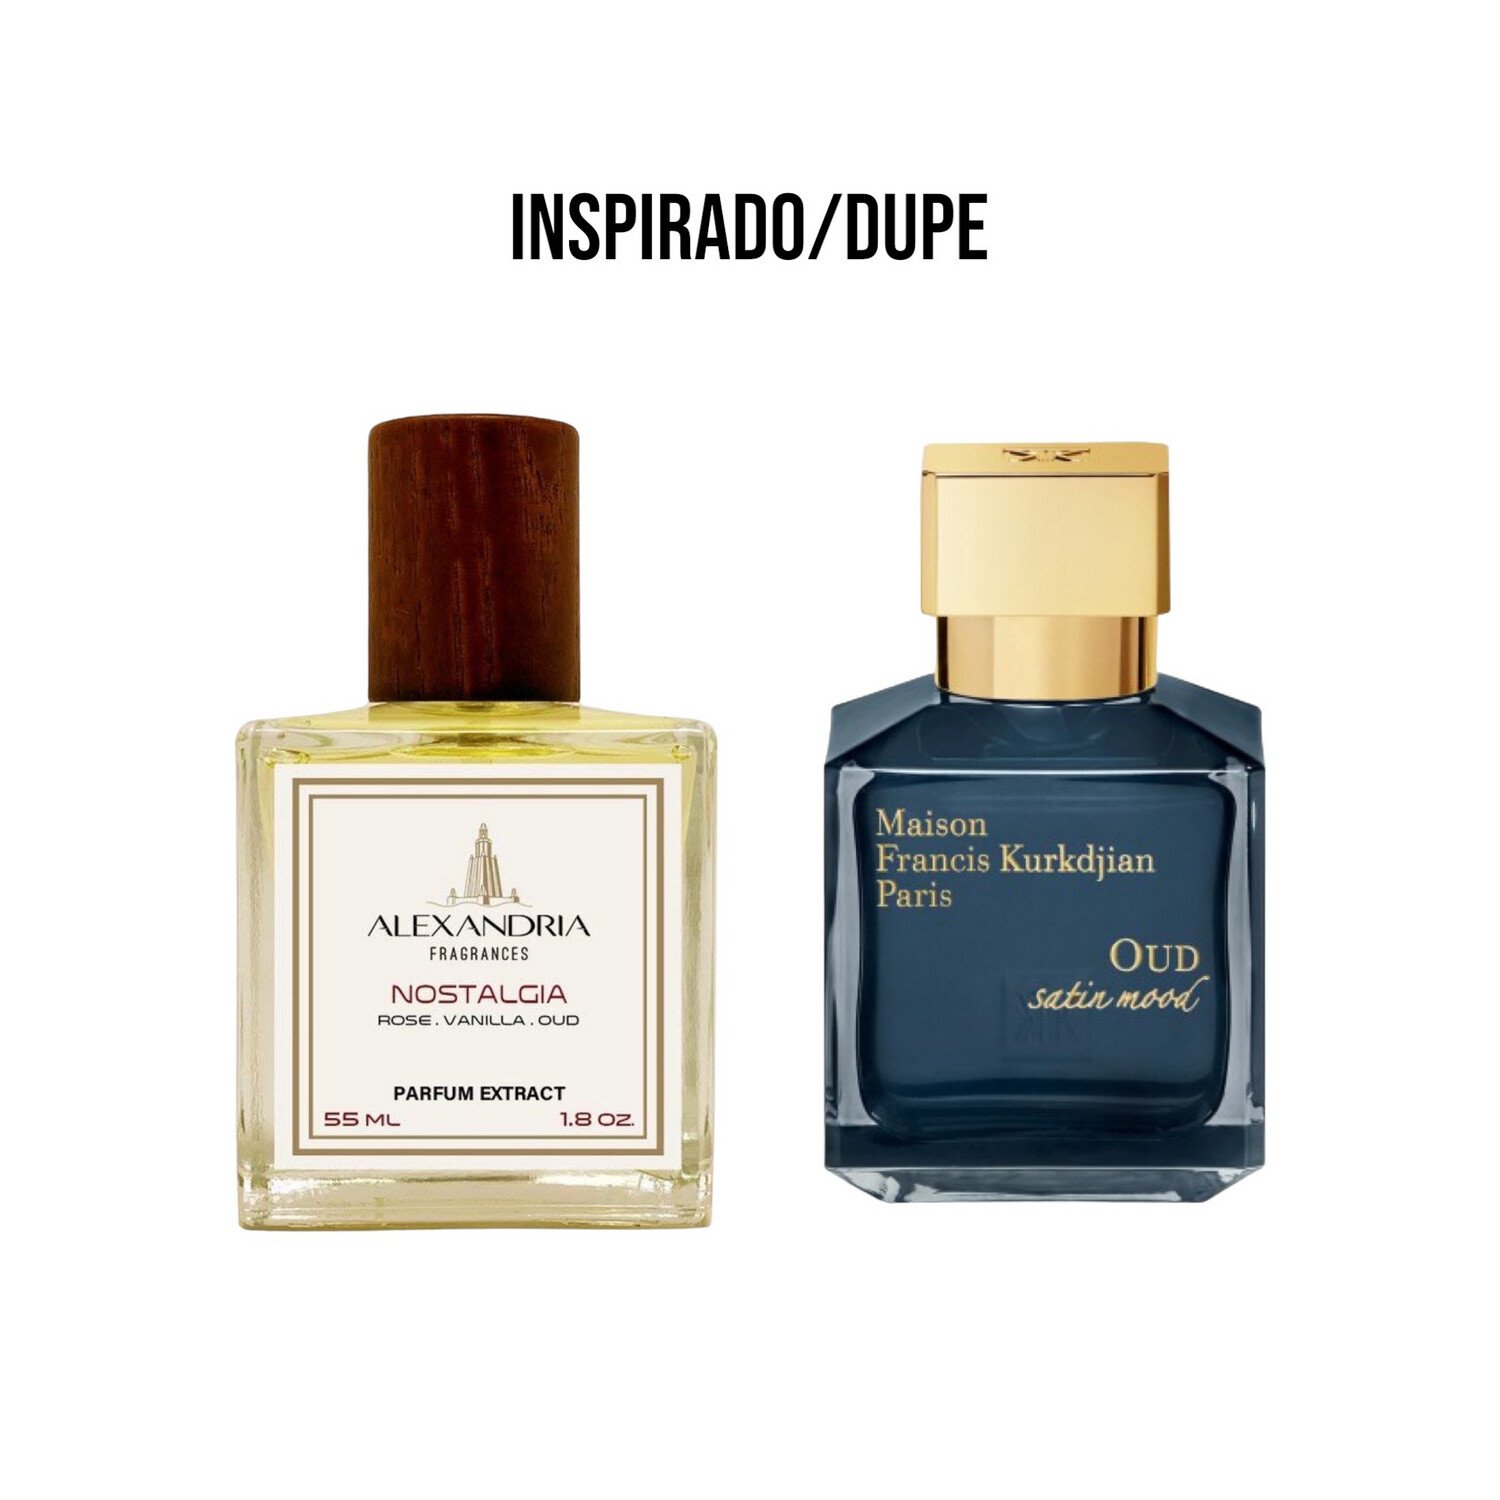 Nostalgia Inspirado en Maison Francis Kurkdjian Oud Satin Mood 55ML extracto perfume Alexandria Fragrances